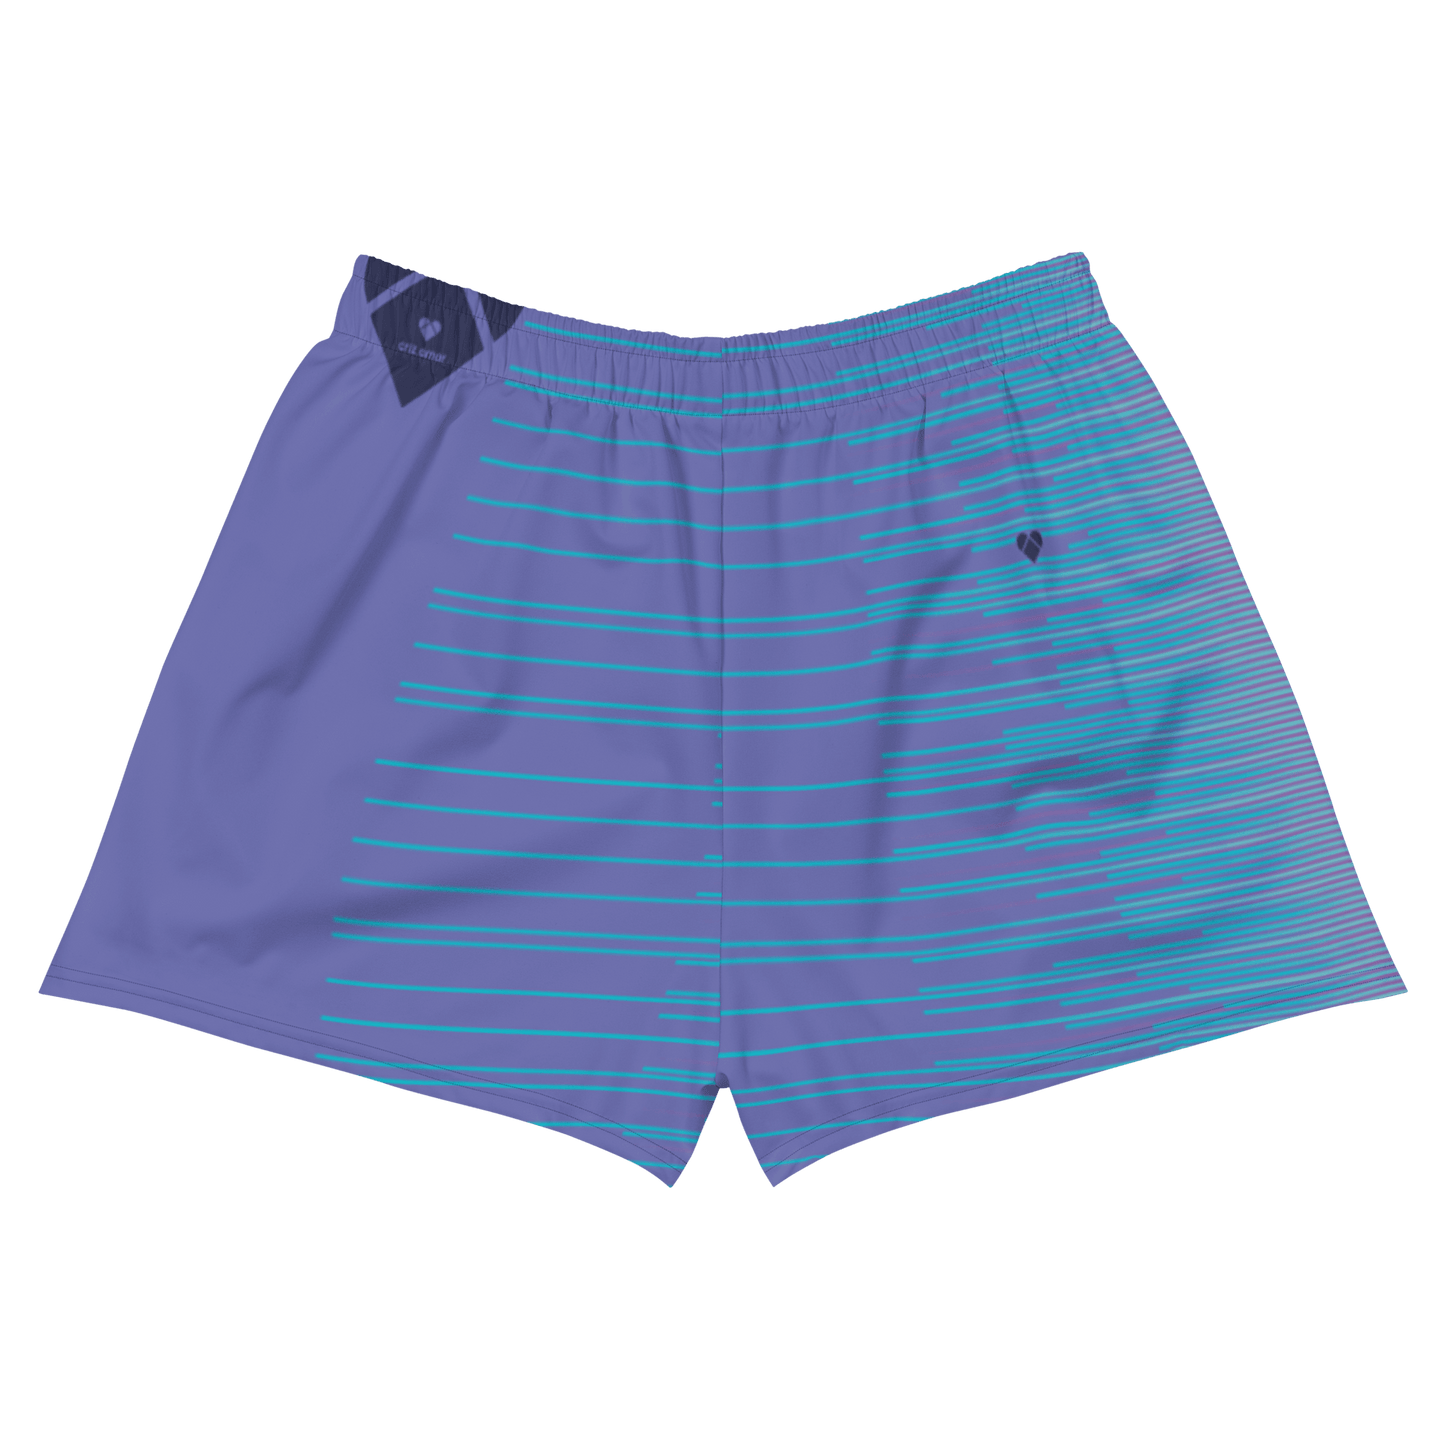 Gradient Design Dual Sport Shorts - CRiZ AMOR's Creative Fashion